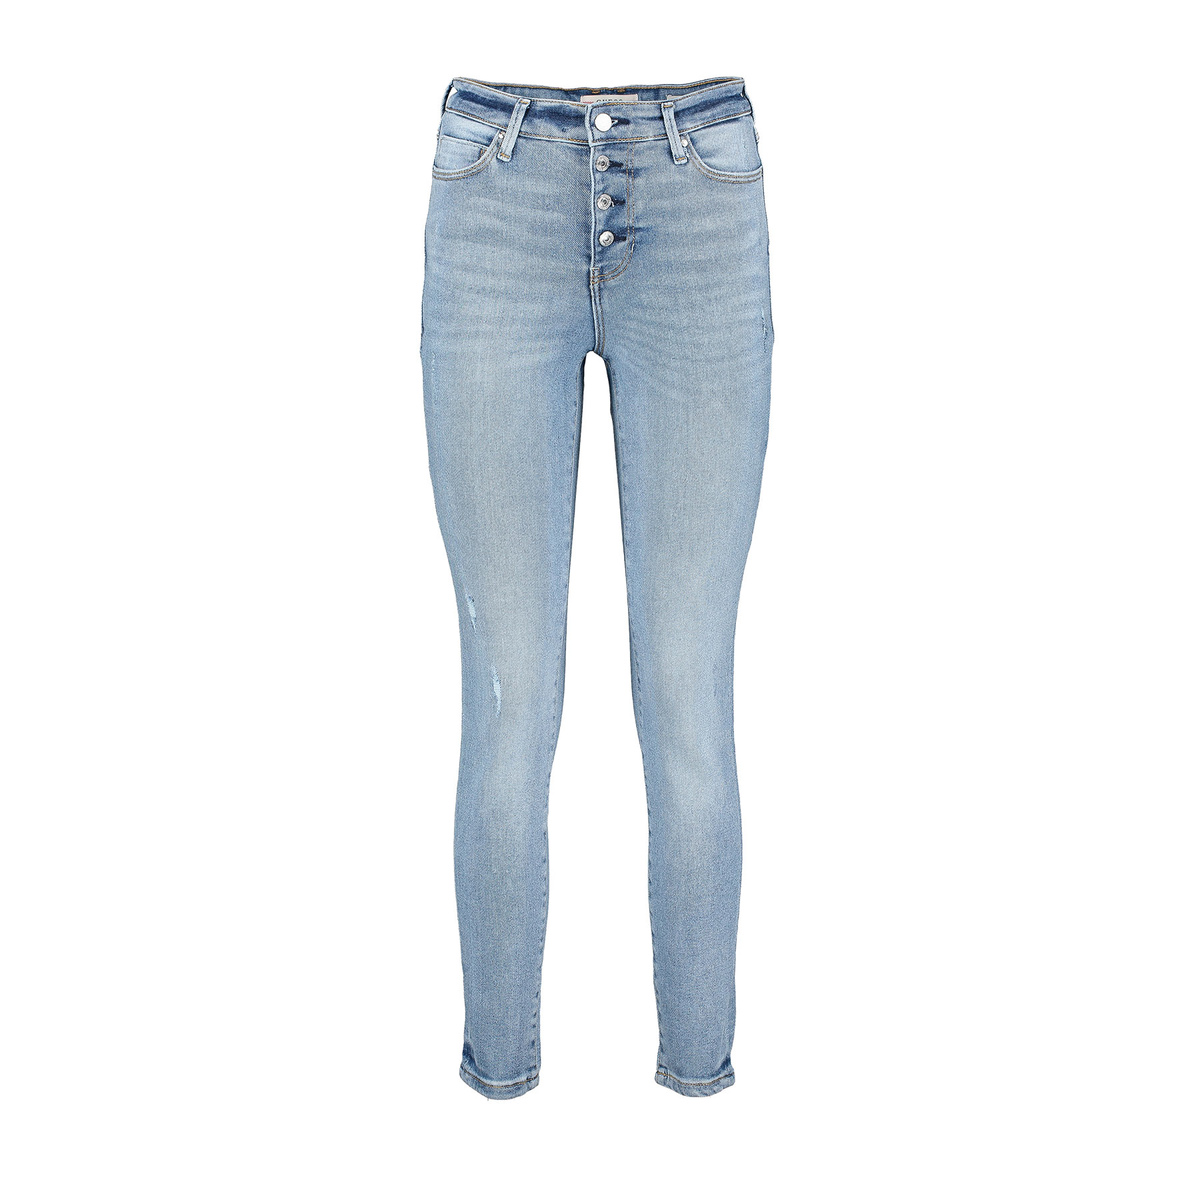 VITA ALTA 1981 EXPOSED BUTTON donna jeans skinny